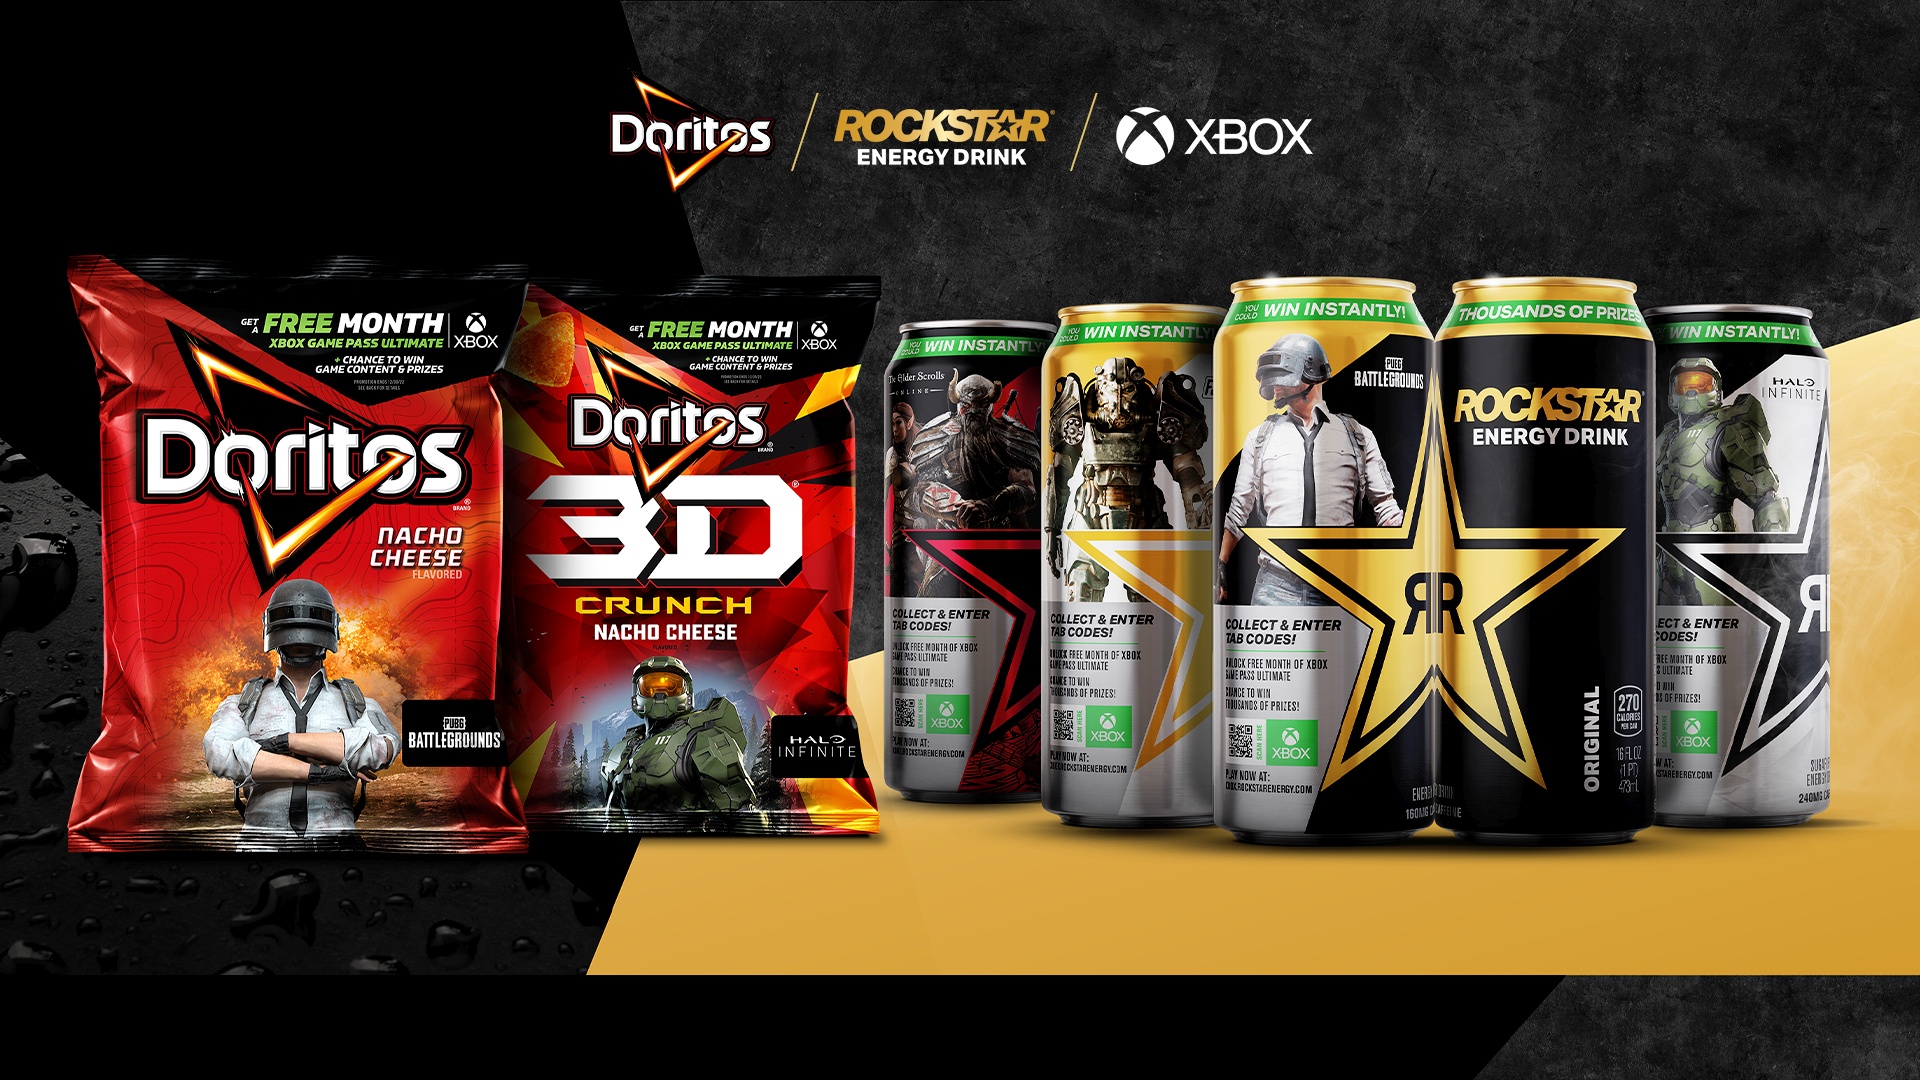 The Doritos Mtn Dew & Rockstar Energy Drink Xbox Promotion